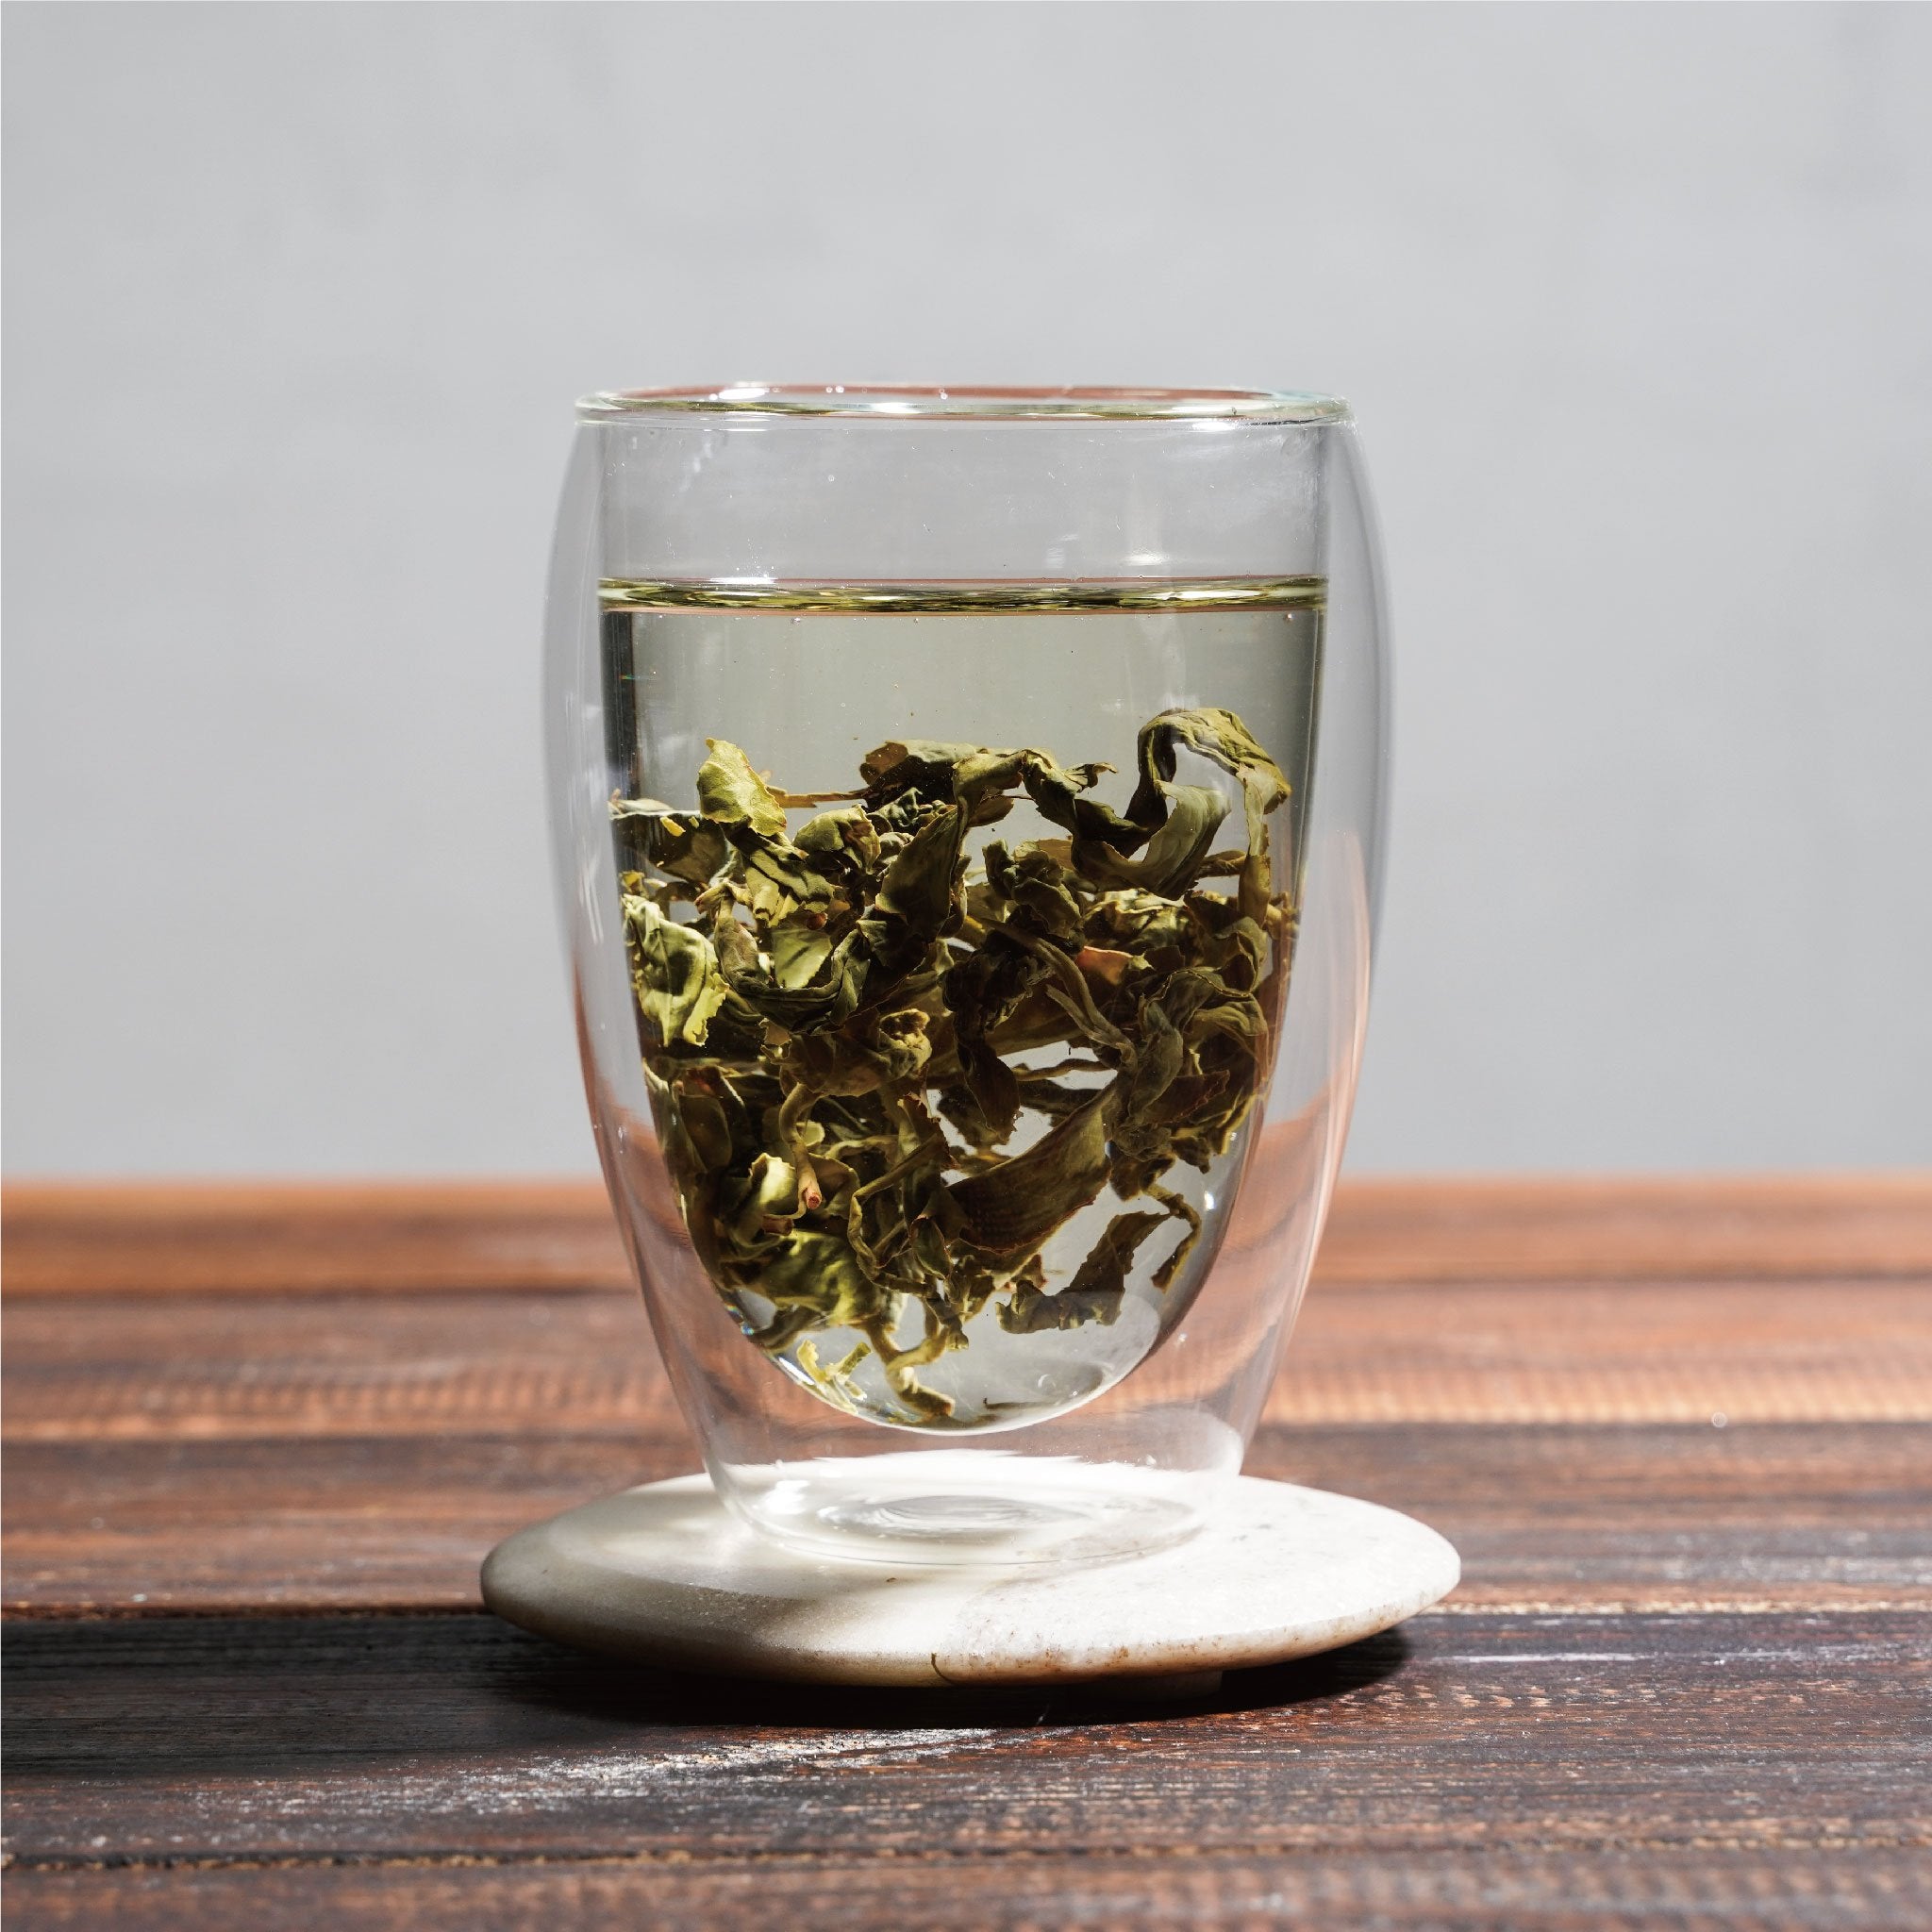 alishan ali mountain wet tea leaves floating in cup